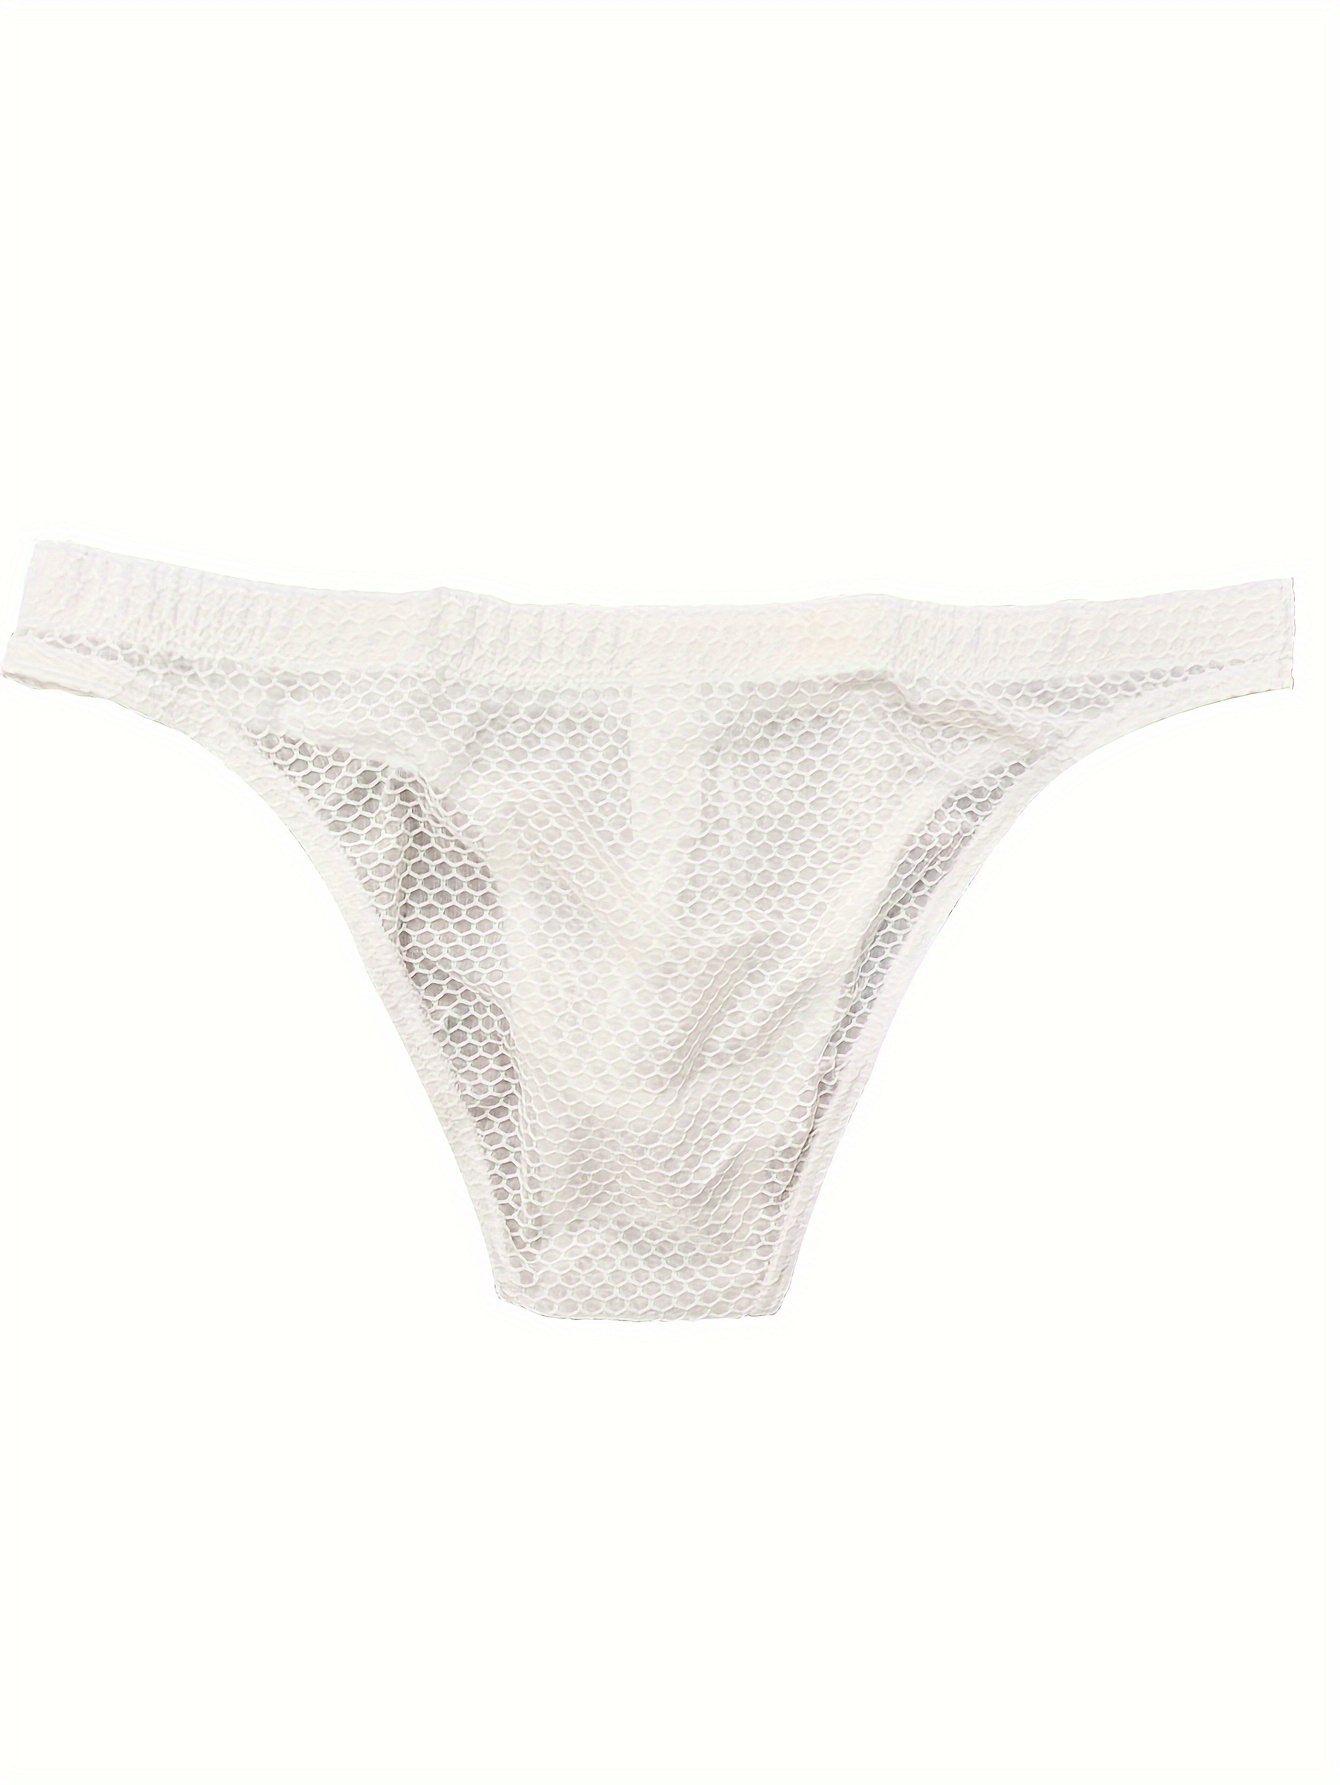 Men Briefs Panties Knickers Breathable Underwear Intimates Scrotum Support  Bag